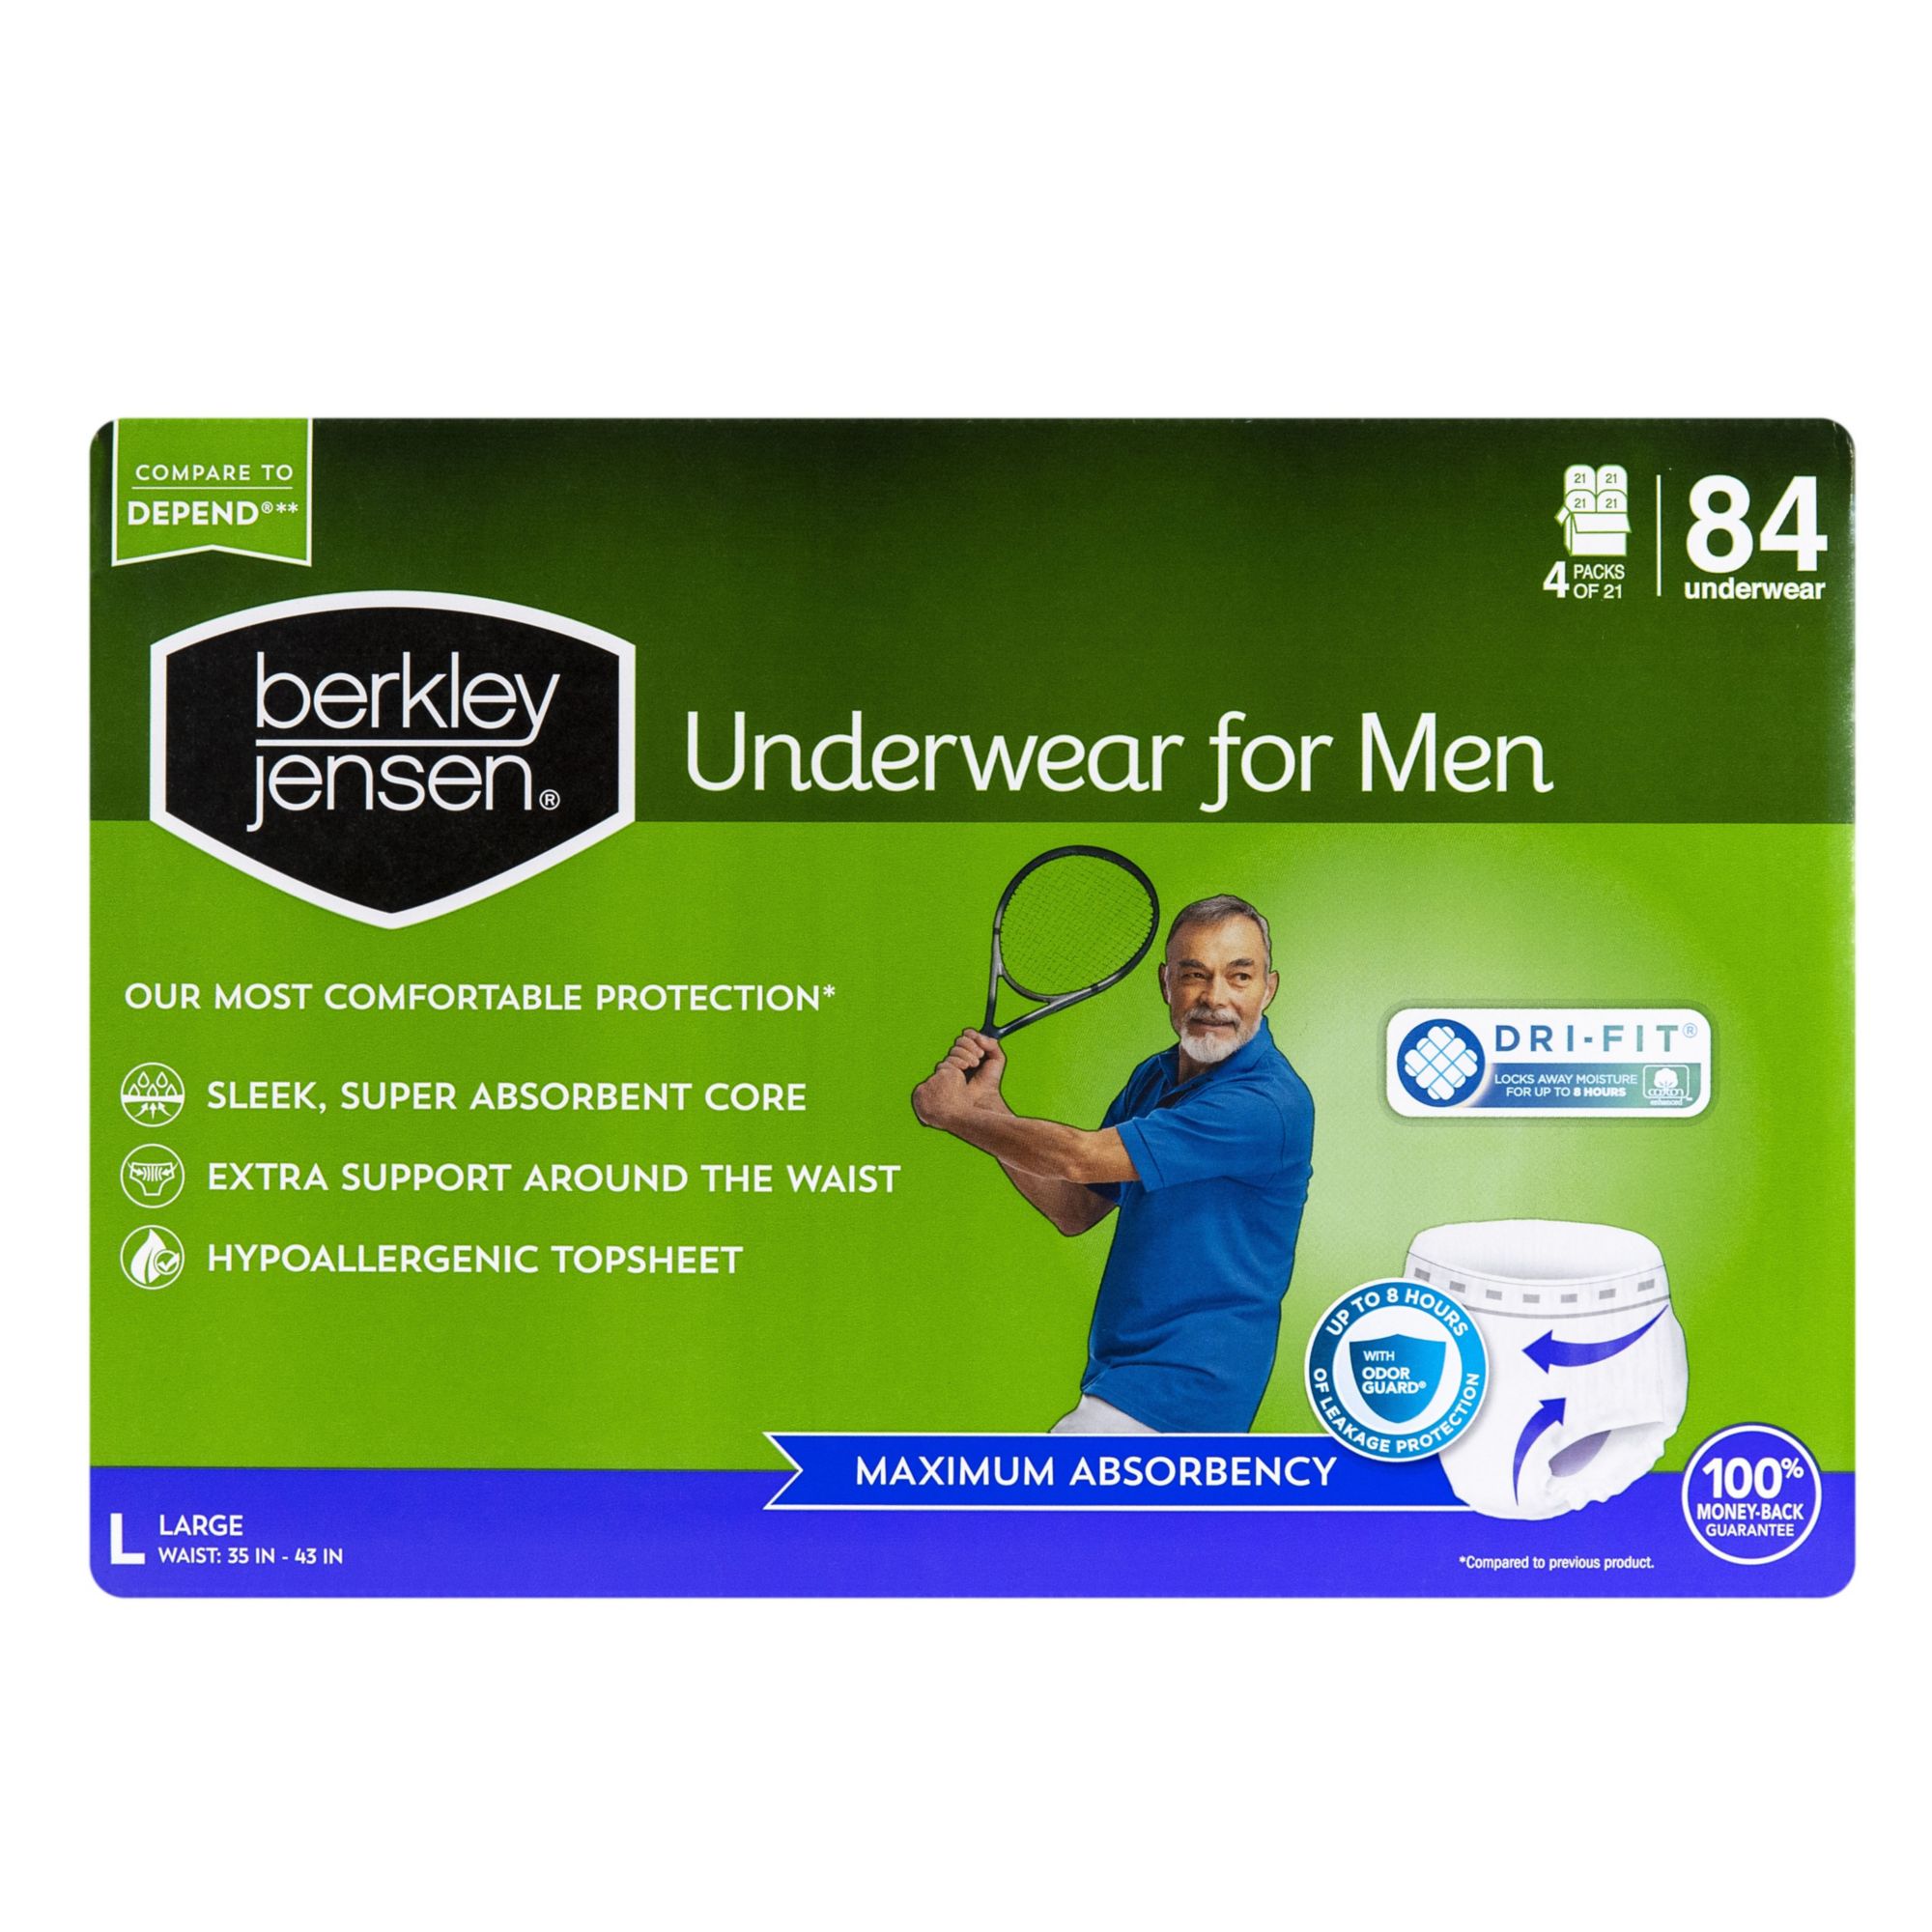 Depend Fit-Flex Extra Large Maximum Absorbency Underwear for Women